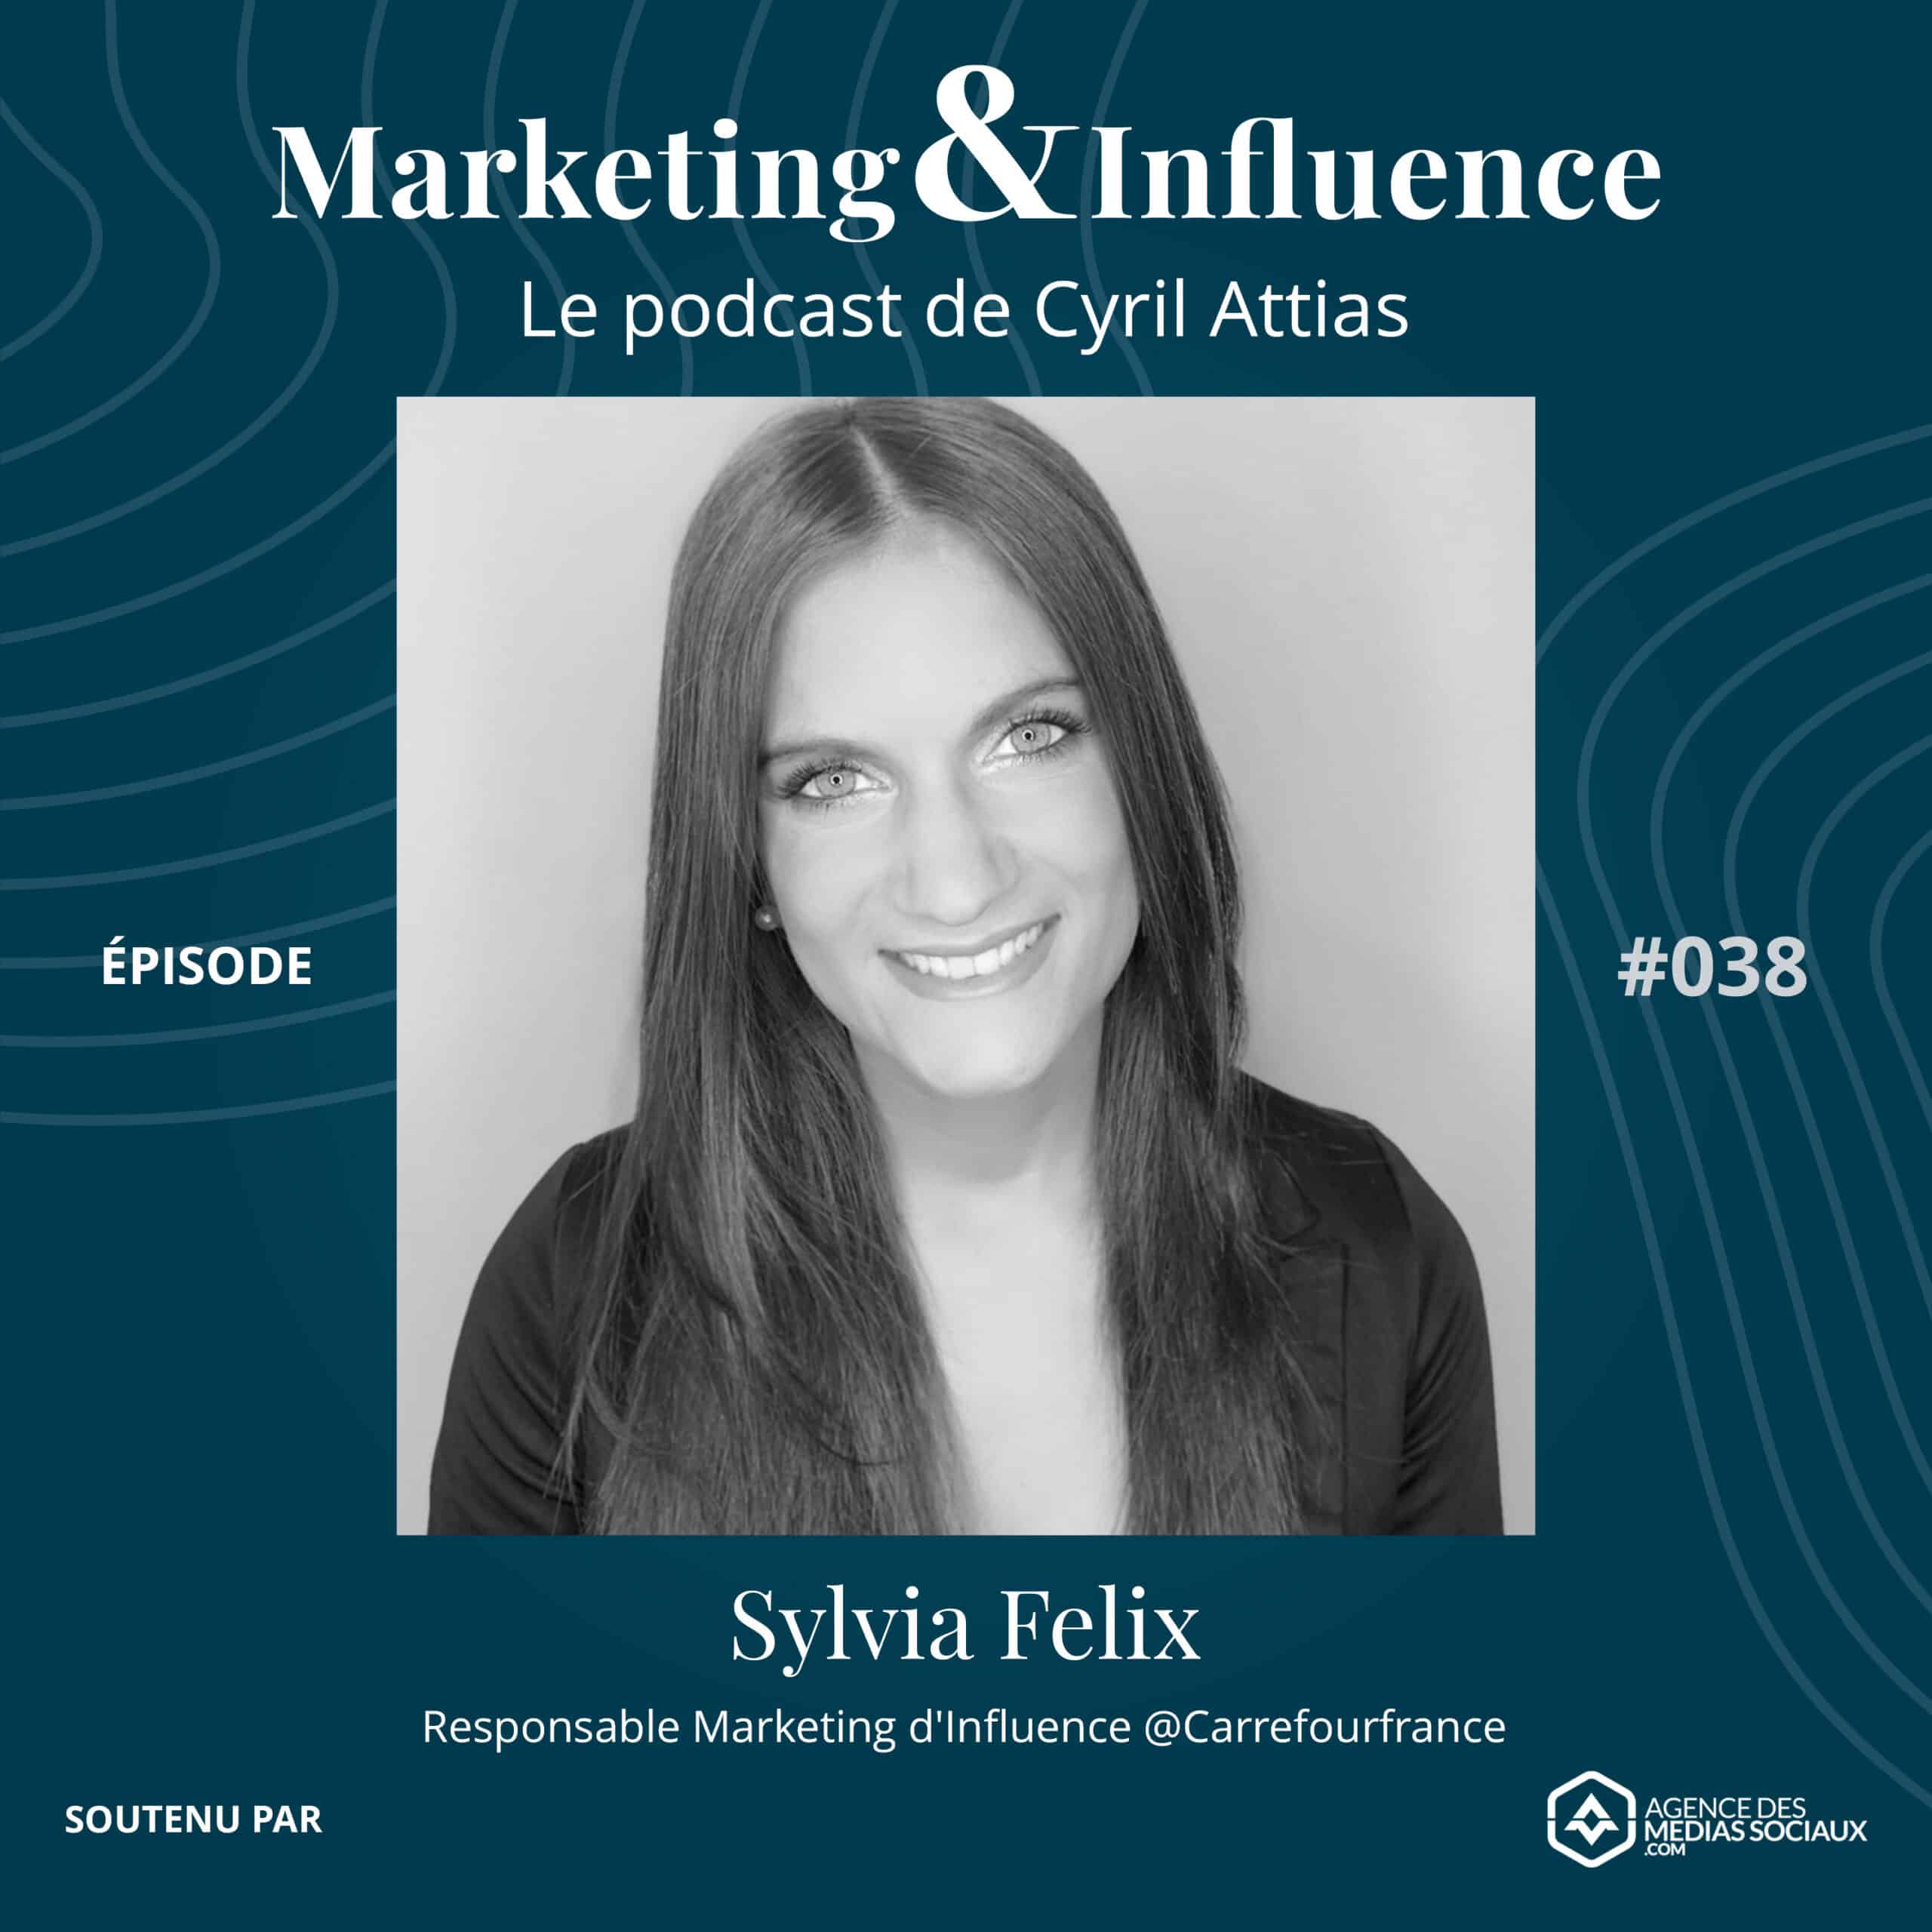 Sylvia-Felix-carrefour-france-Podcast-Cyril-Attias-Marketing-Influence